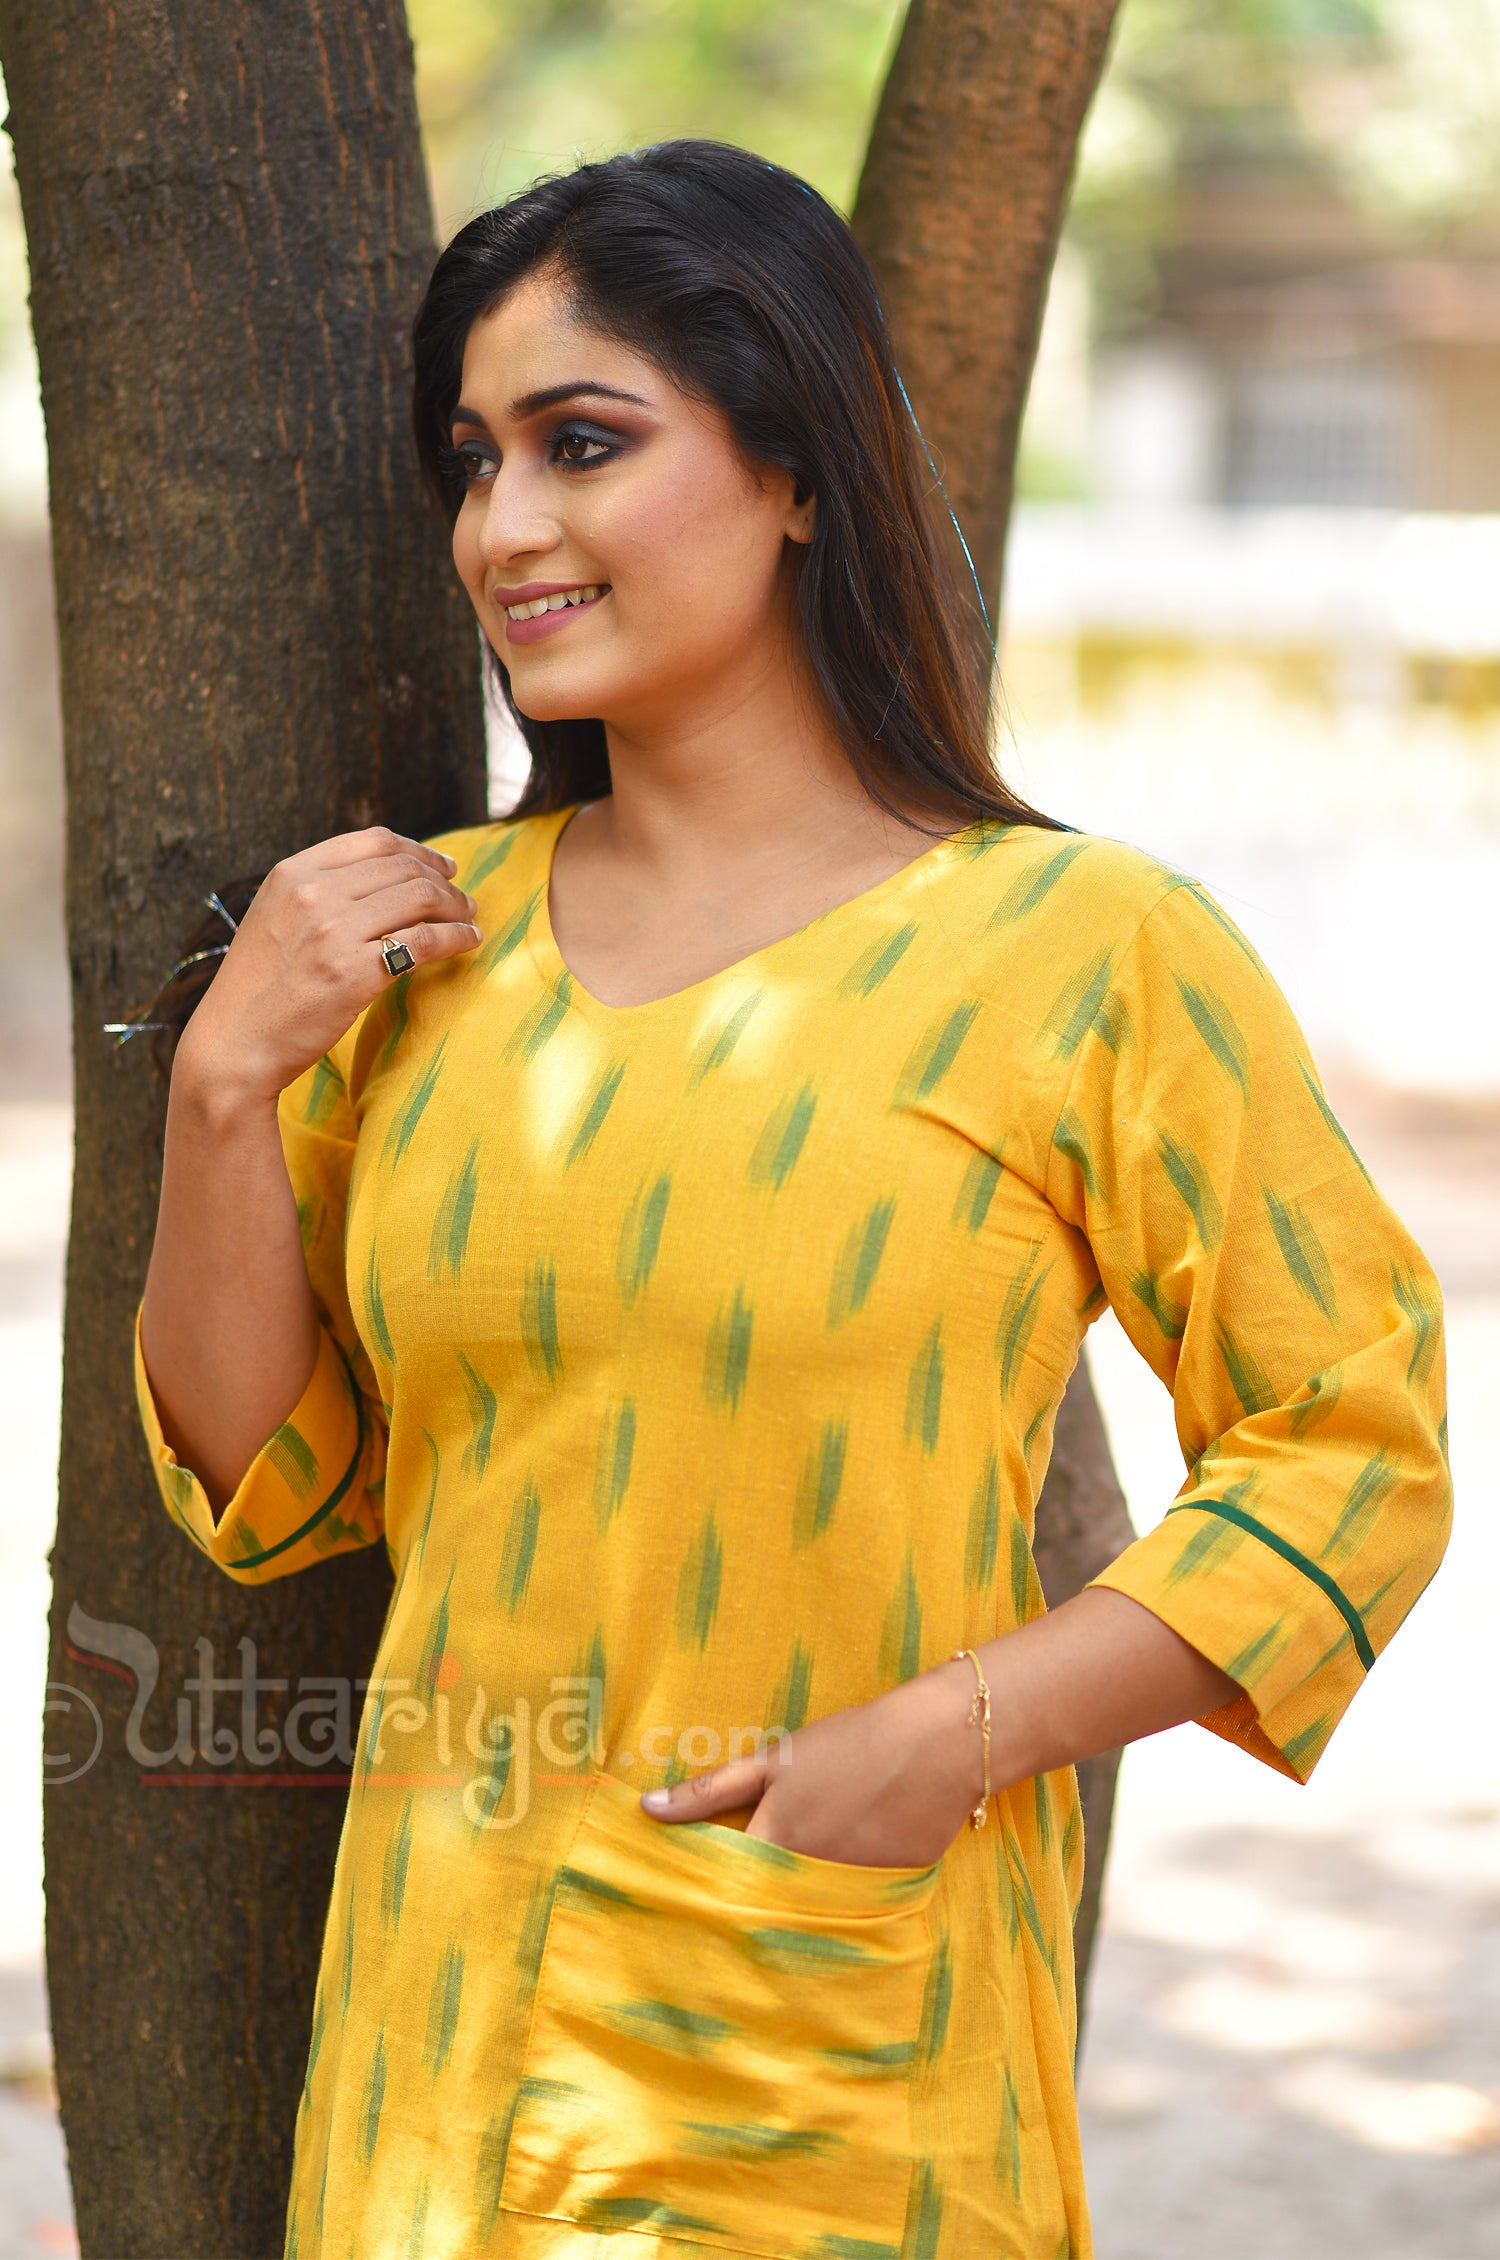 Lime yellow Ikkat dress - Uttariya